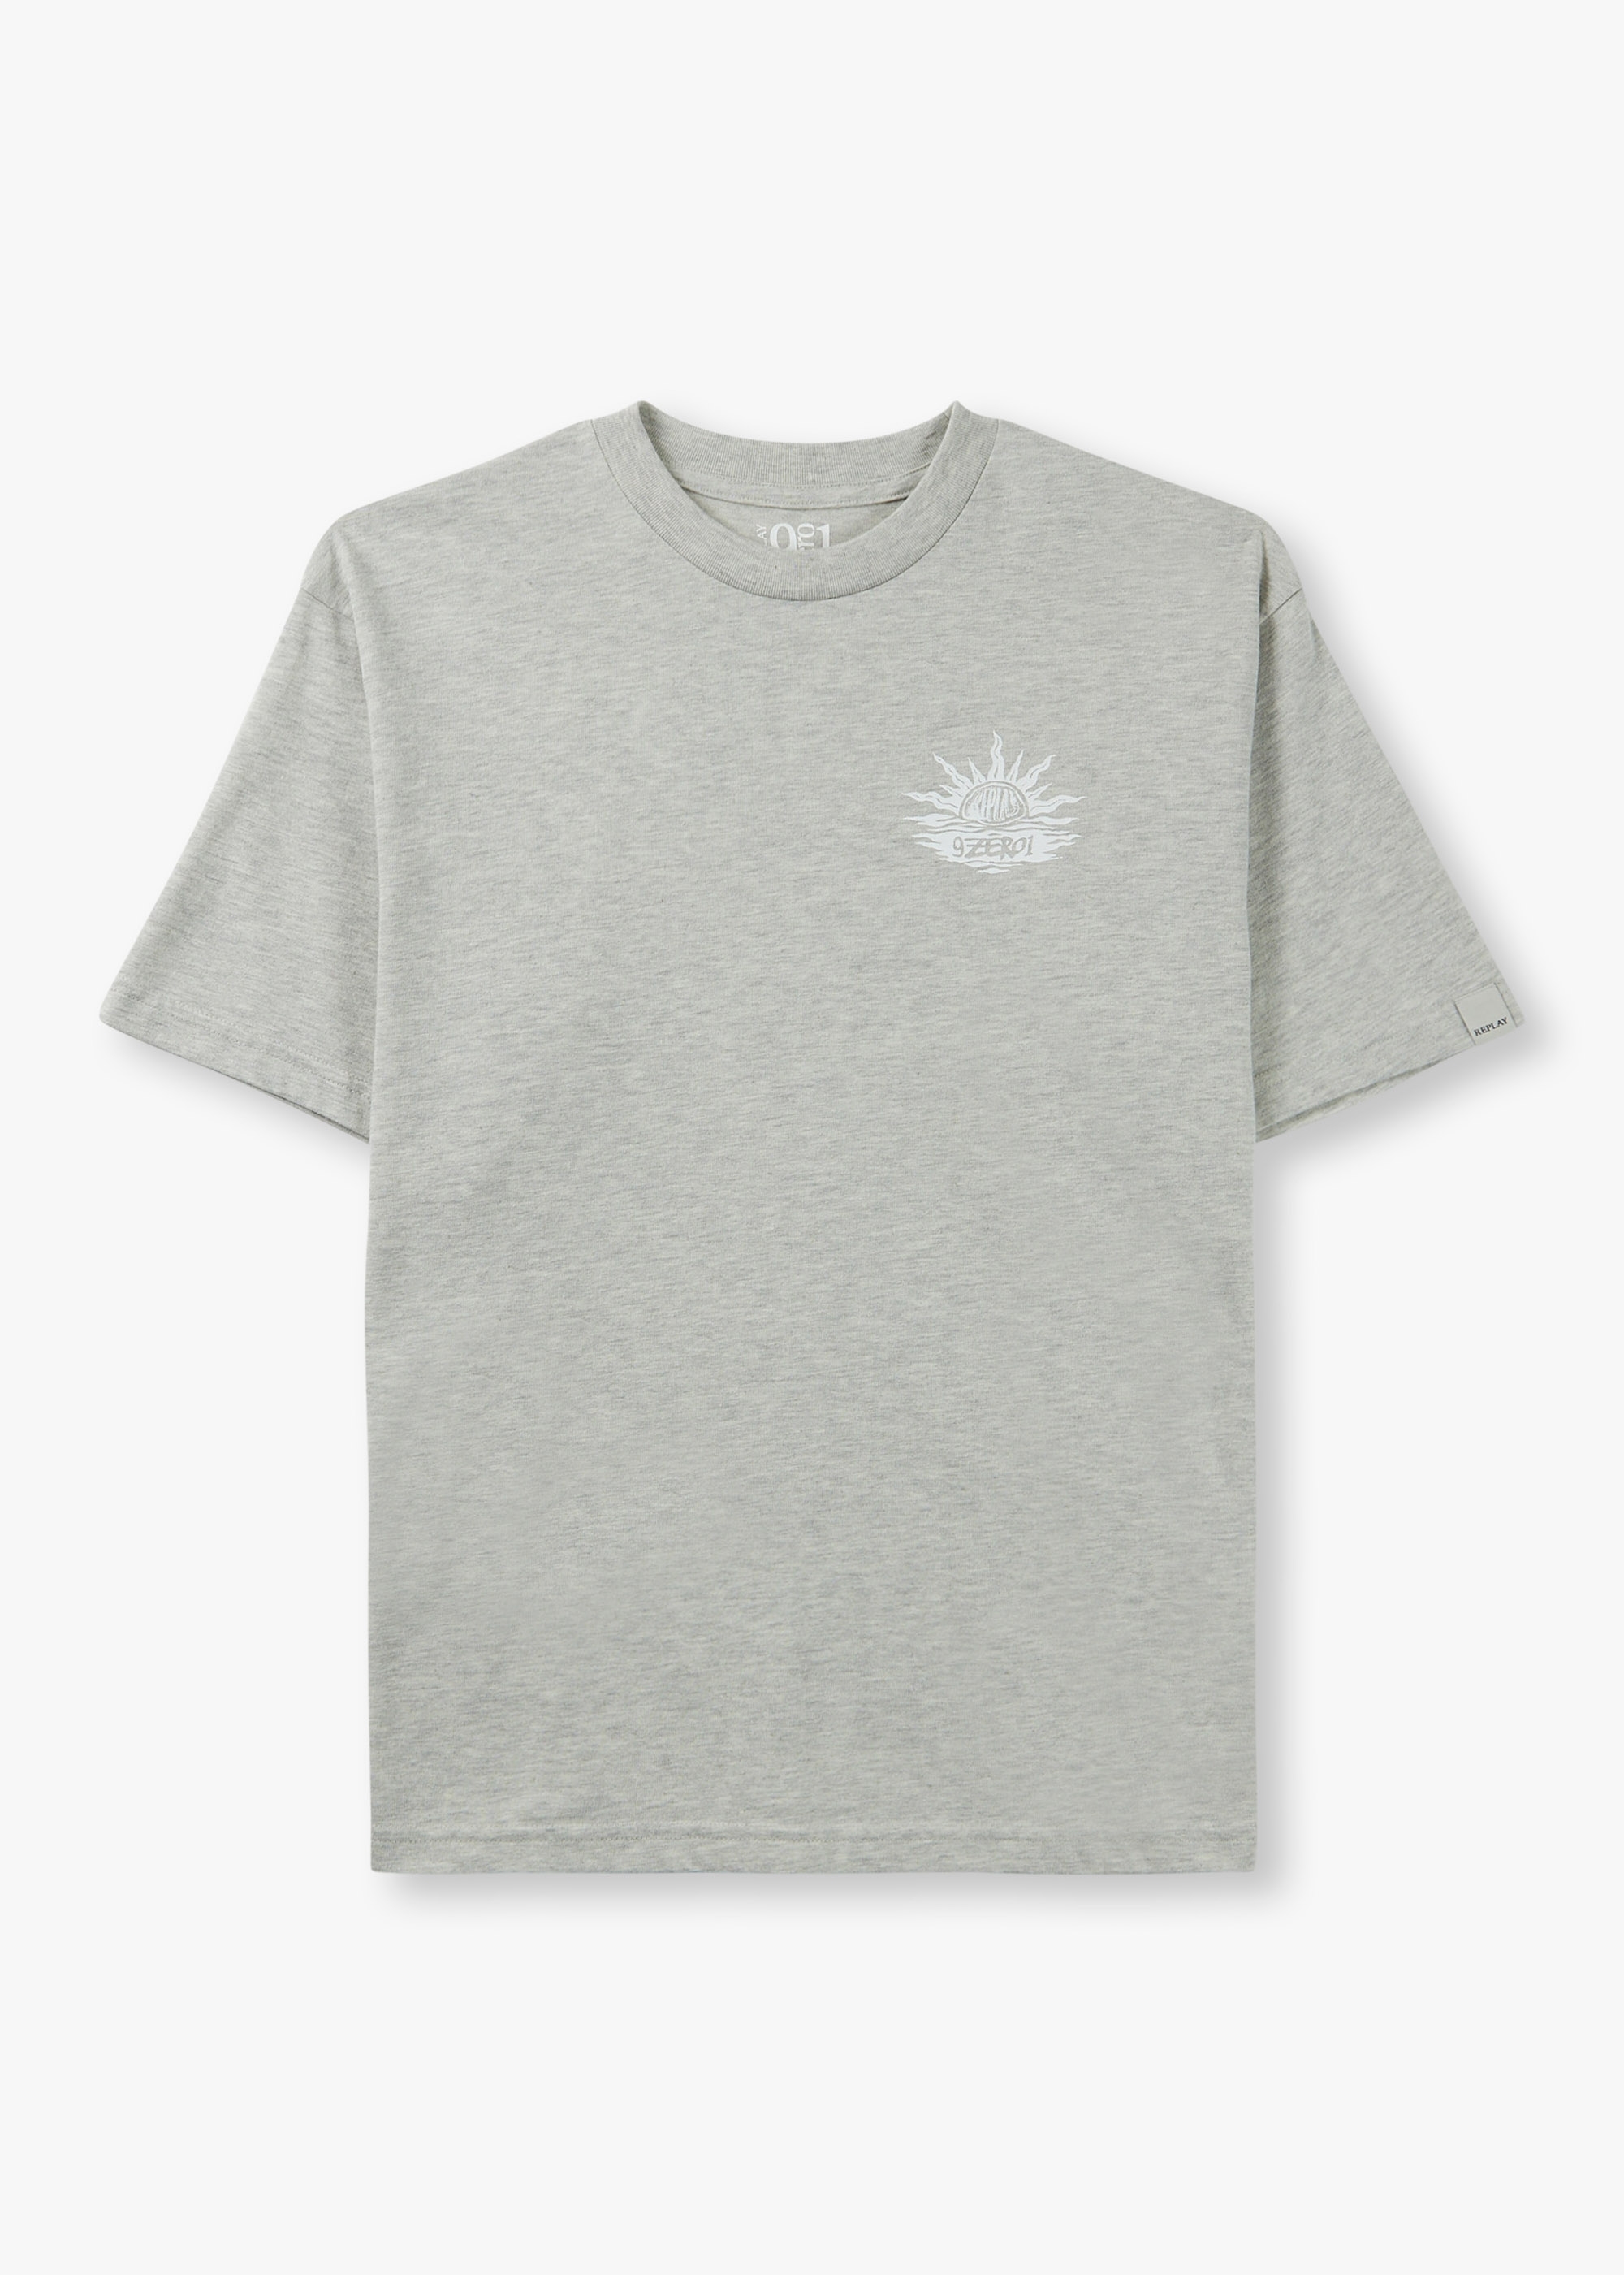 Replay Mens 9zero1 Back Graphic T-Shirt In Grey